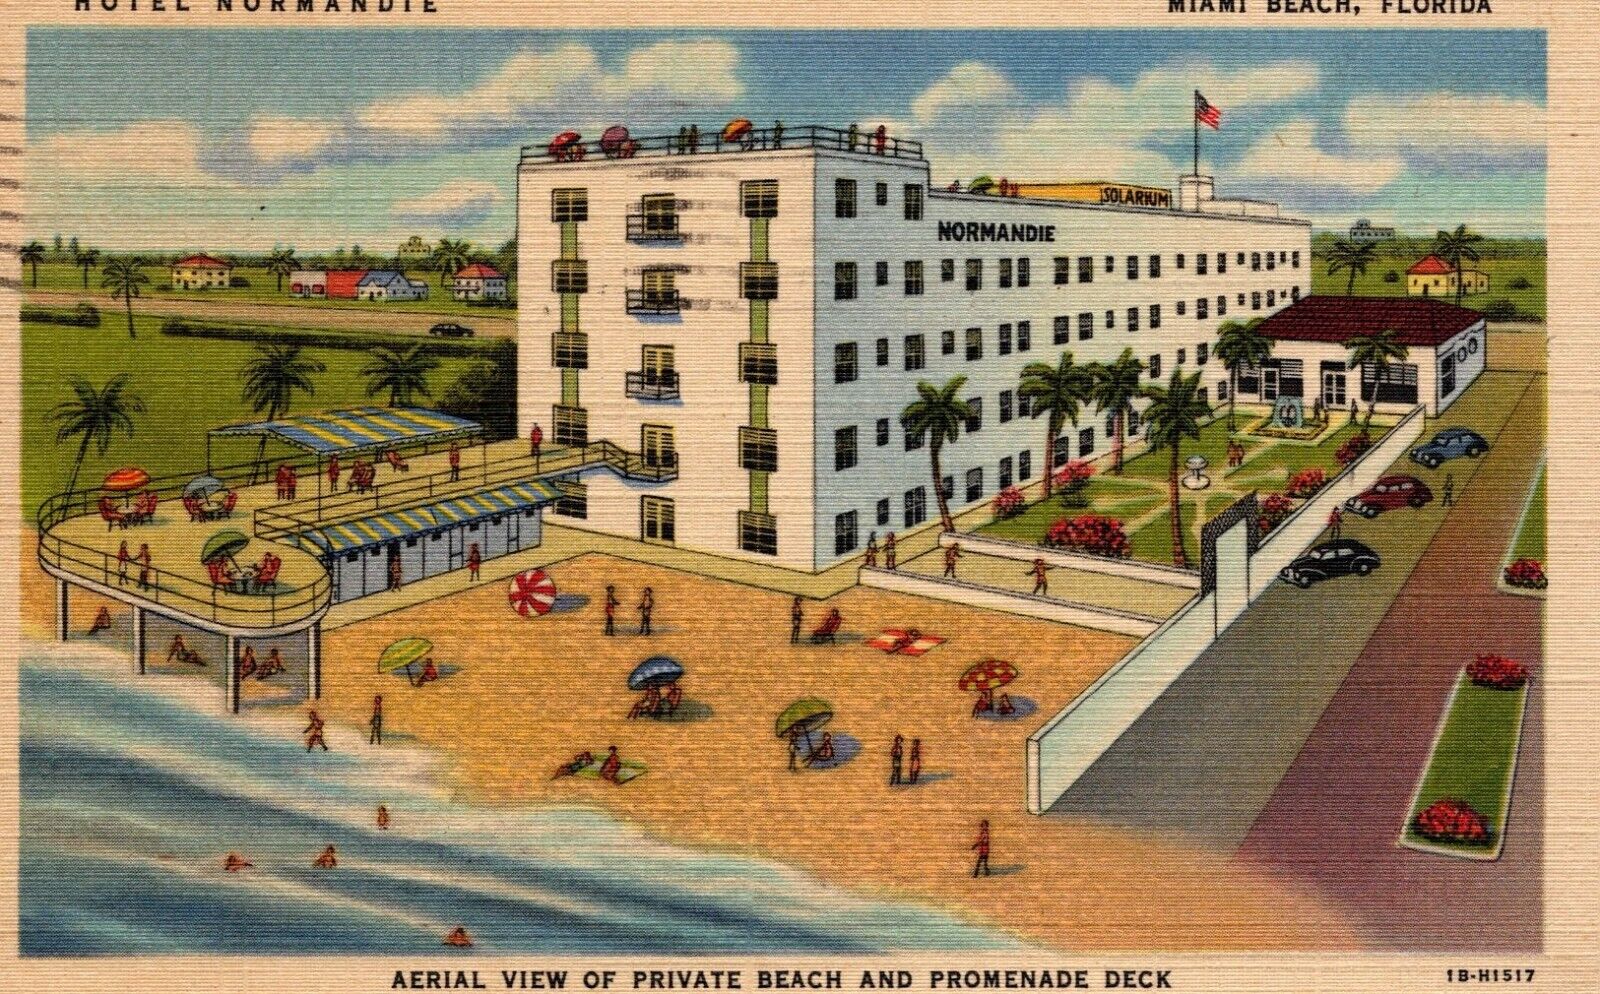 Miami Beach Florida Hotel Normandie Advertisement Linen Postcard Posted 1949